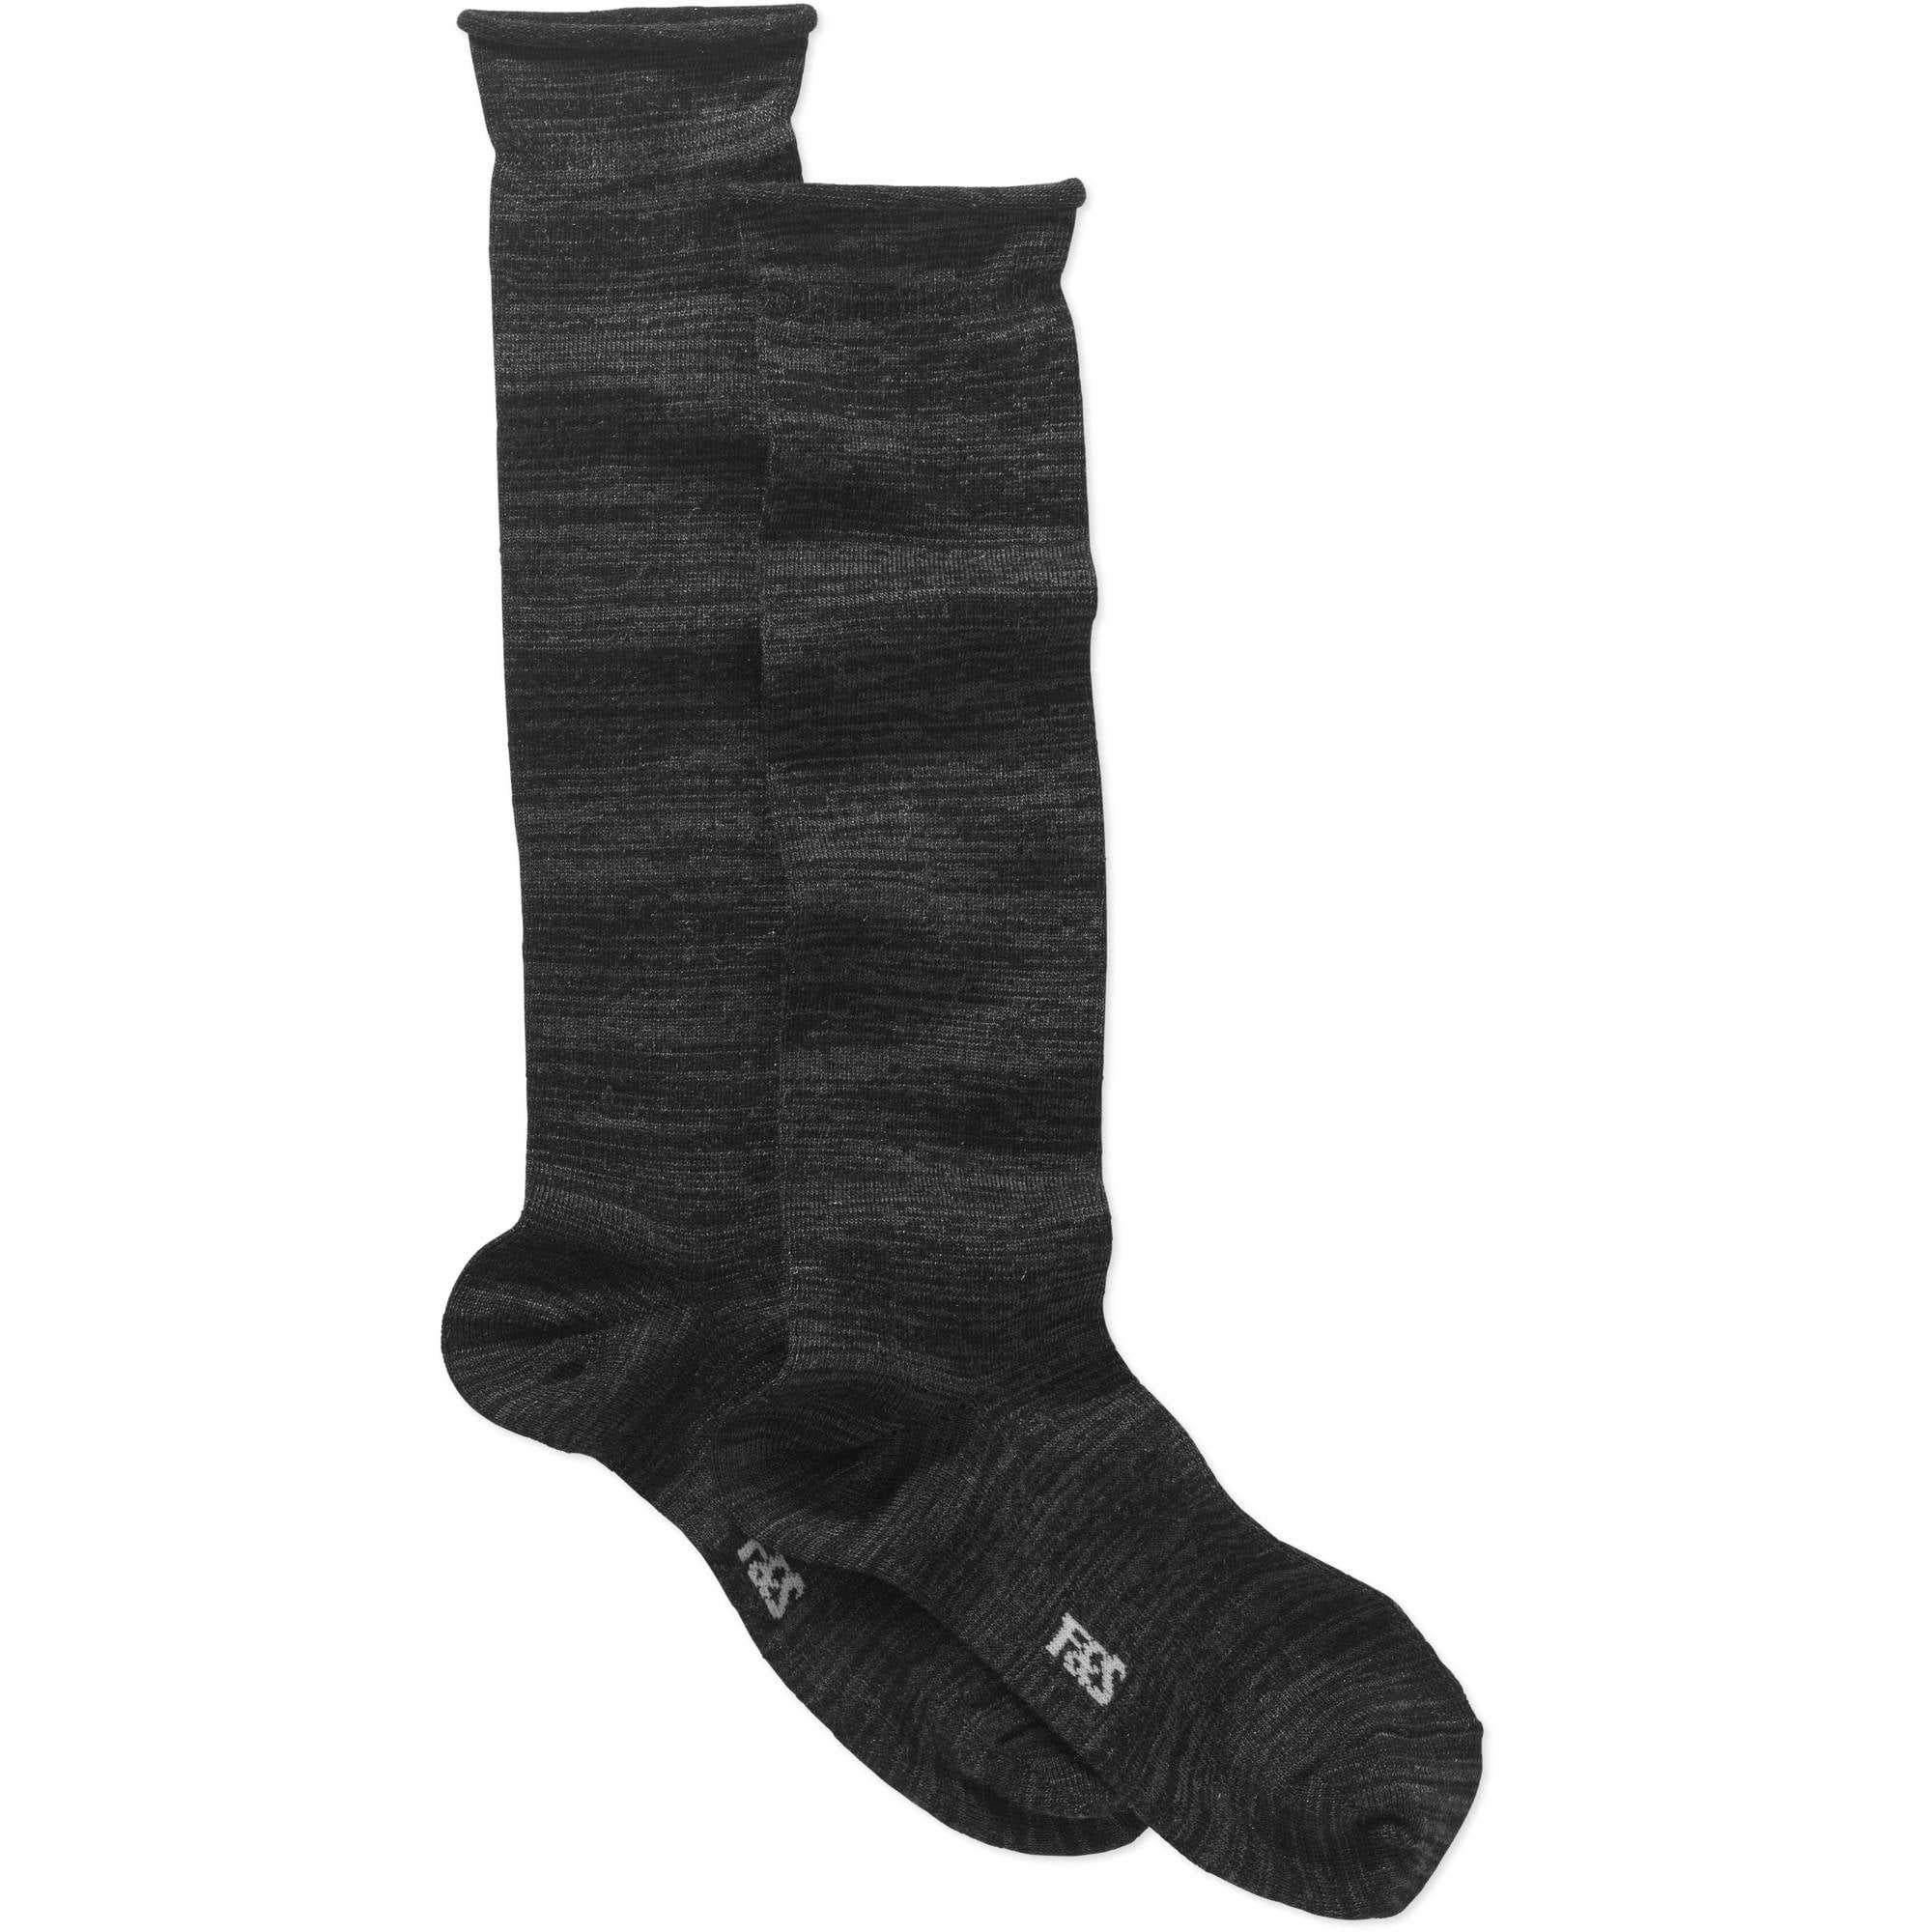 Field and Stream Women's Knee high Socks 1 Pair - Walmart.com